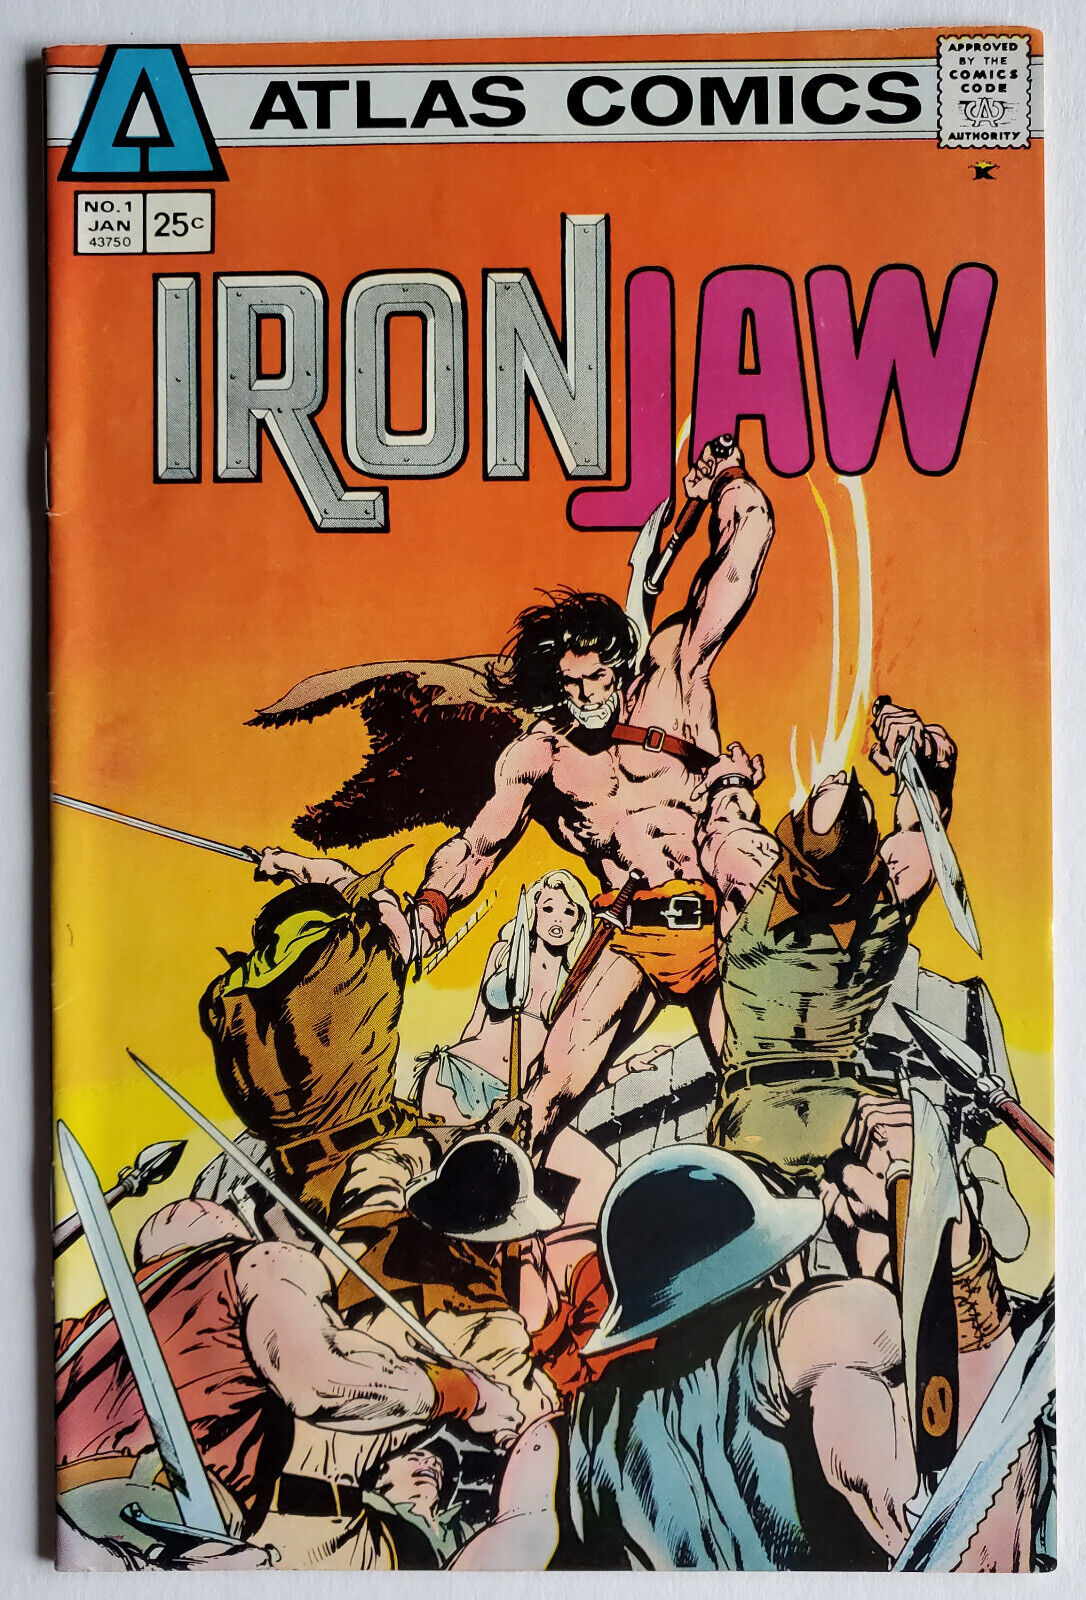 Lot of 3 IronJaw Comics – Atlas Comics – Neal Adams Covers - Iron Jaw